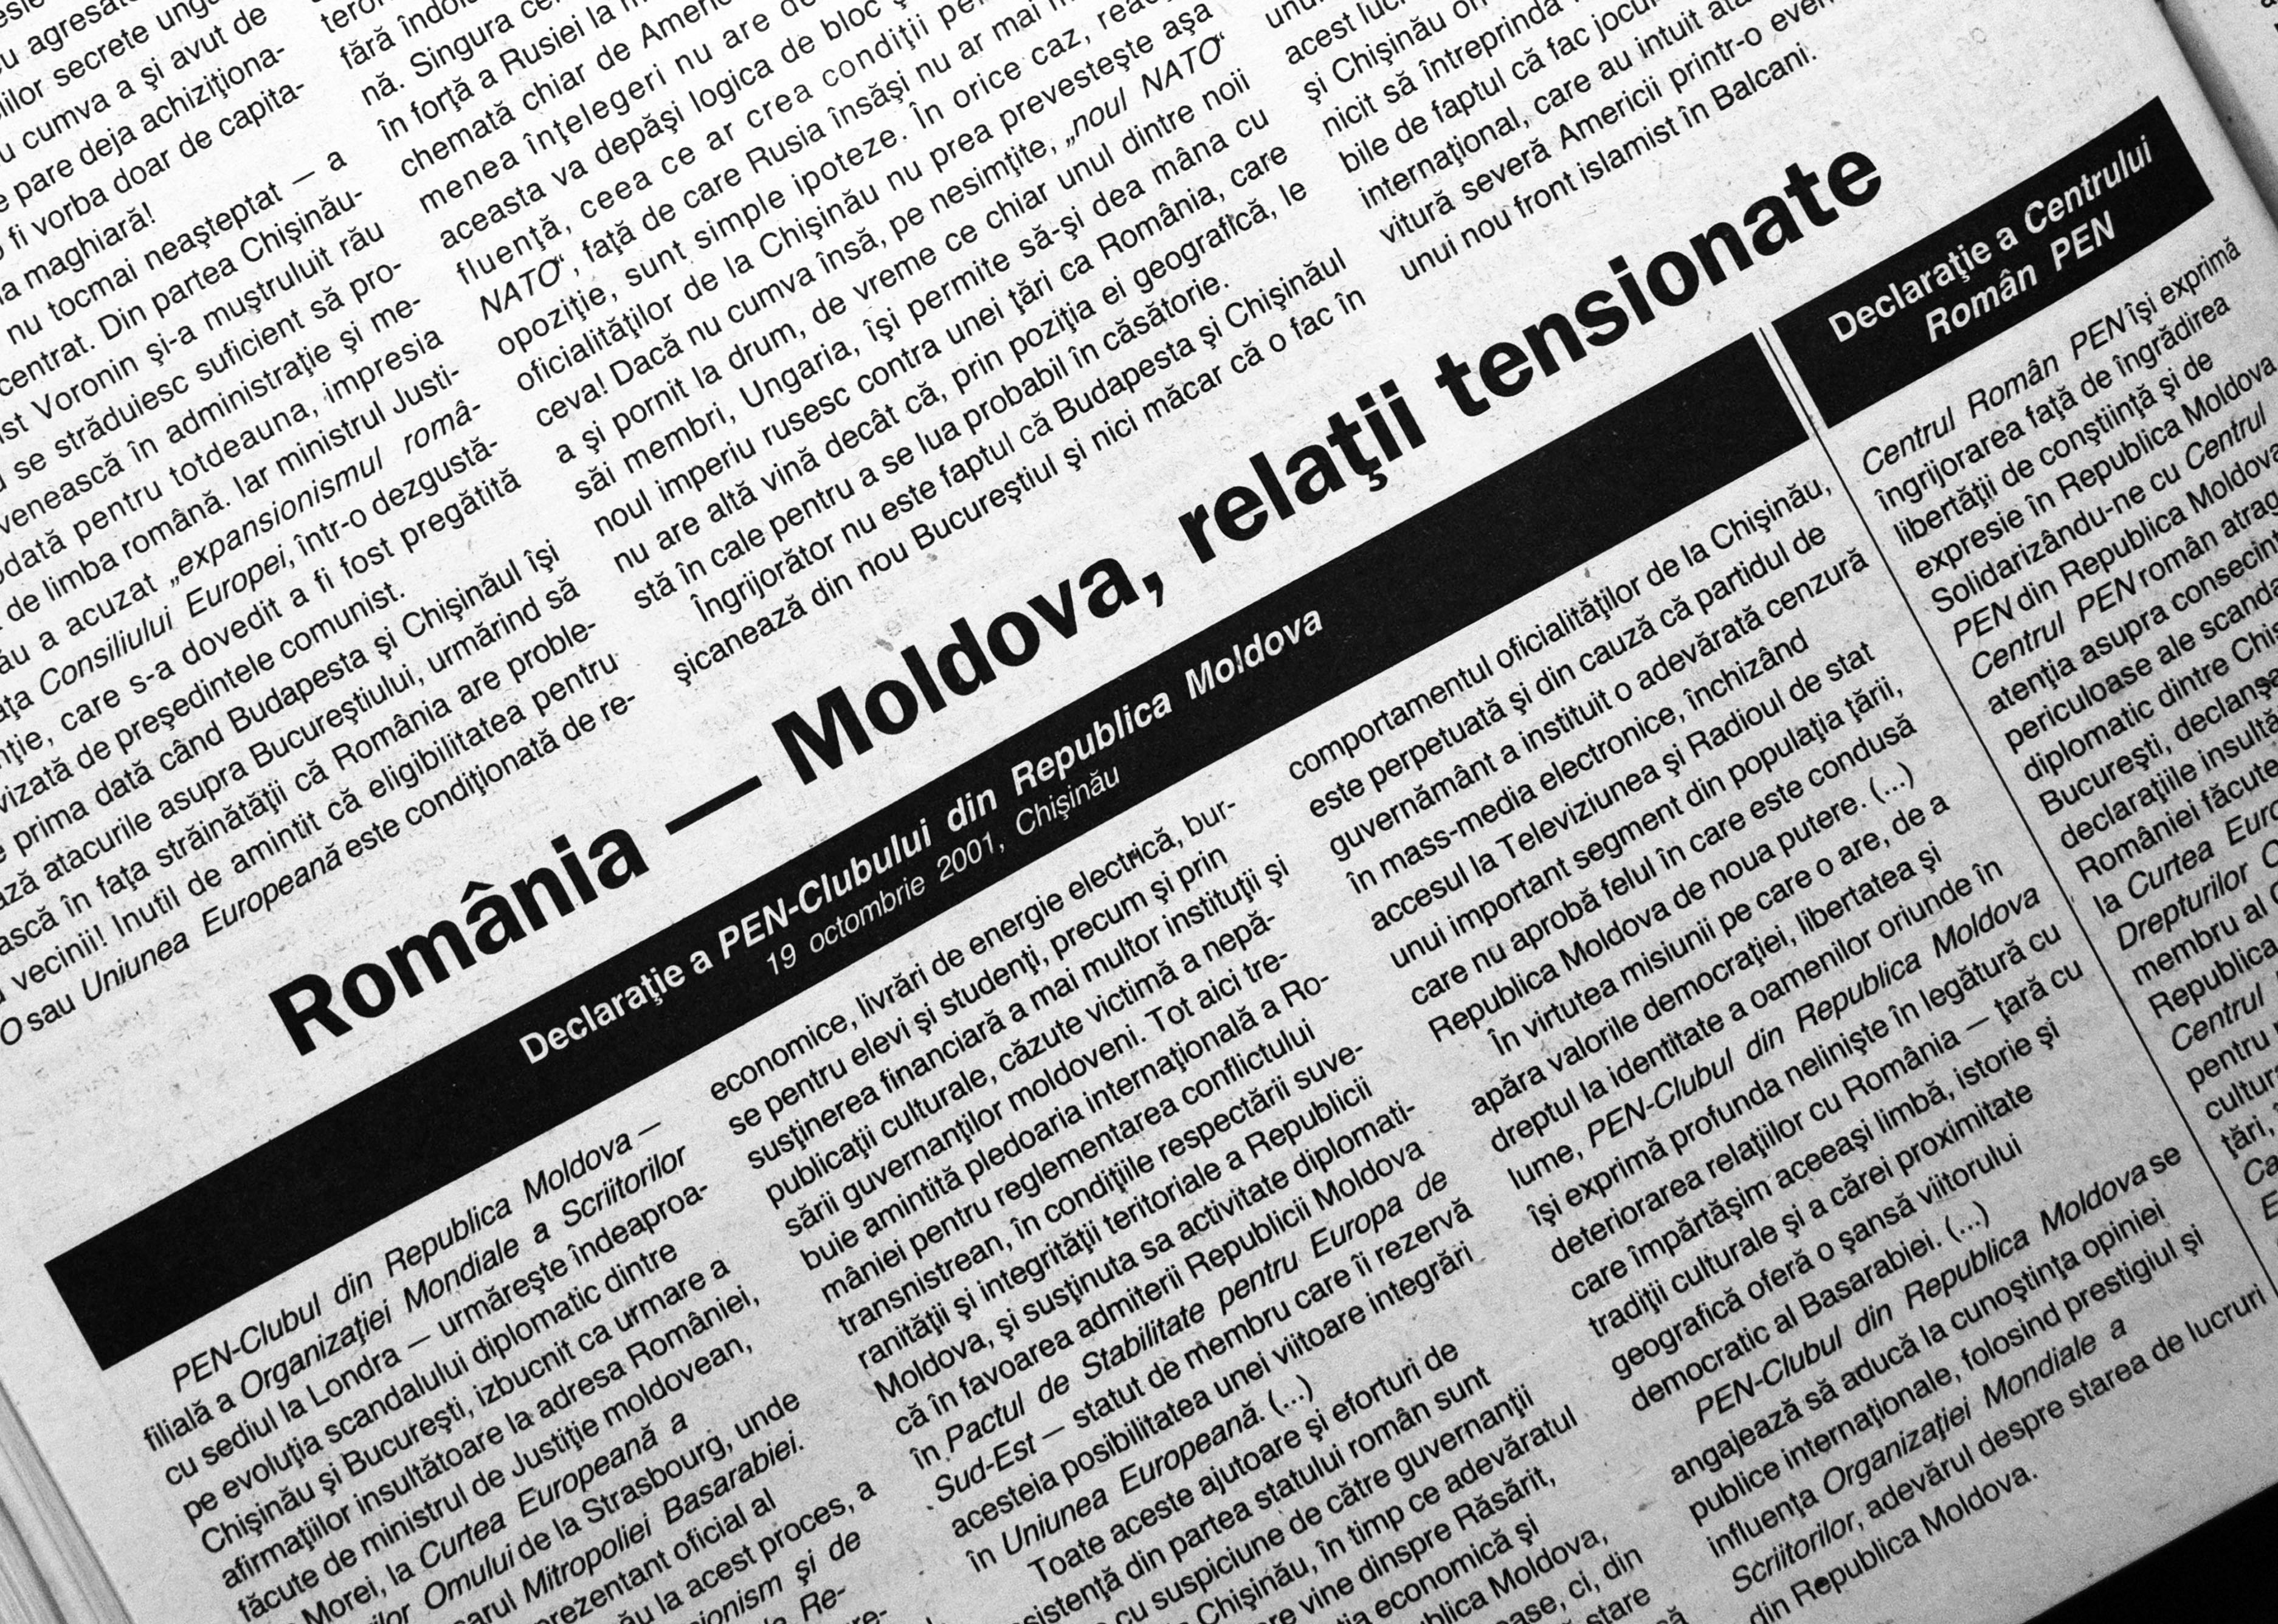 Tensiuni între România și Republica Moldova